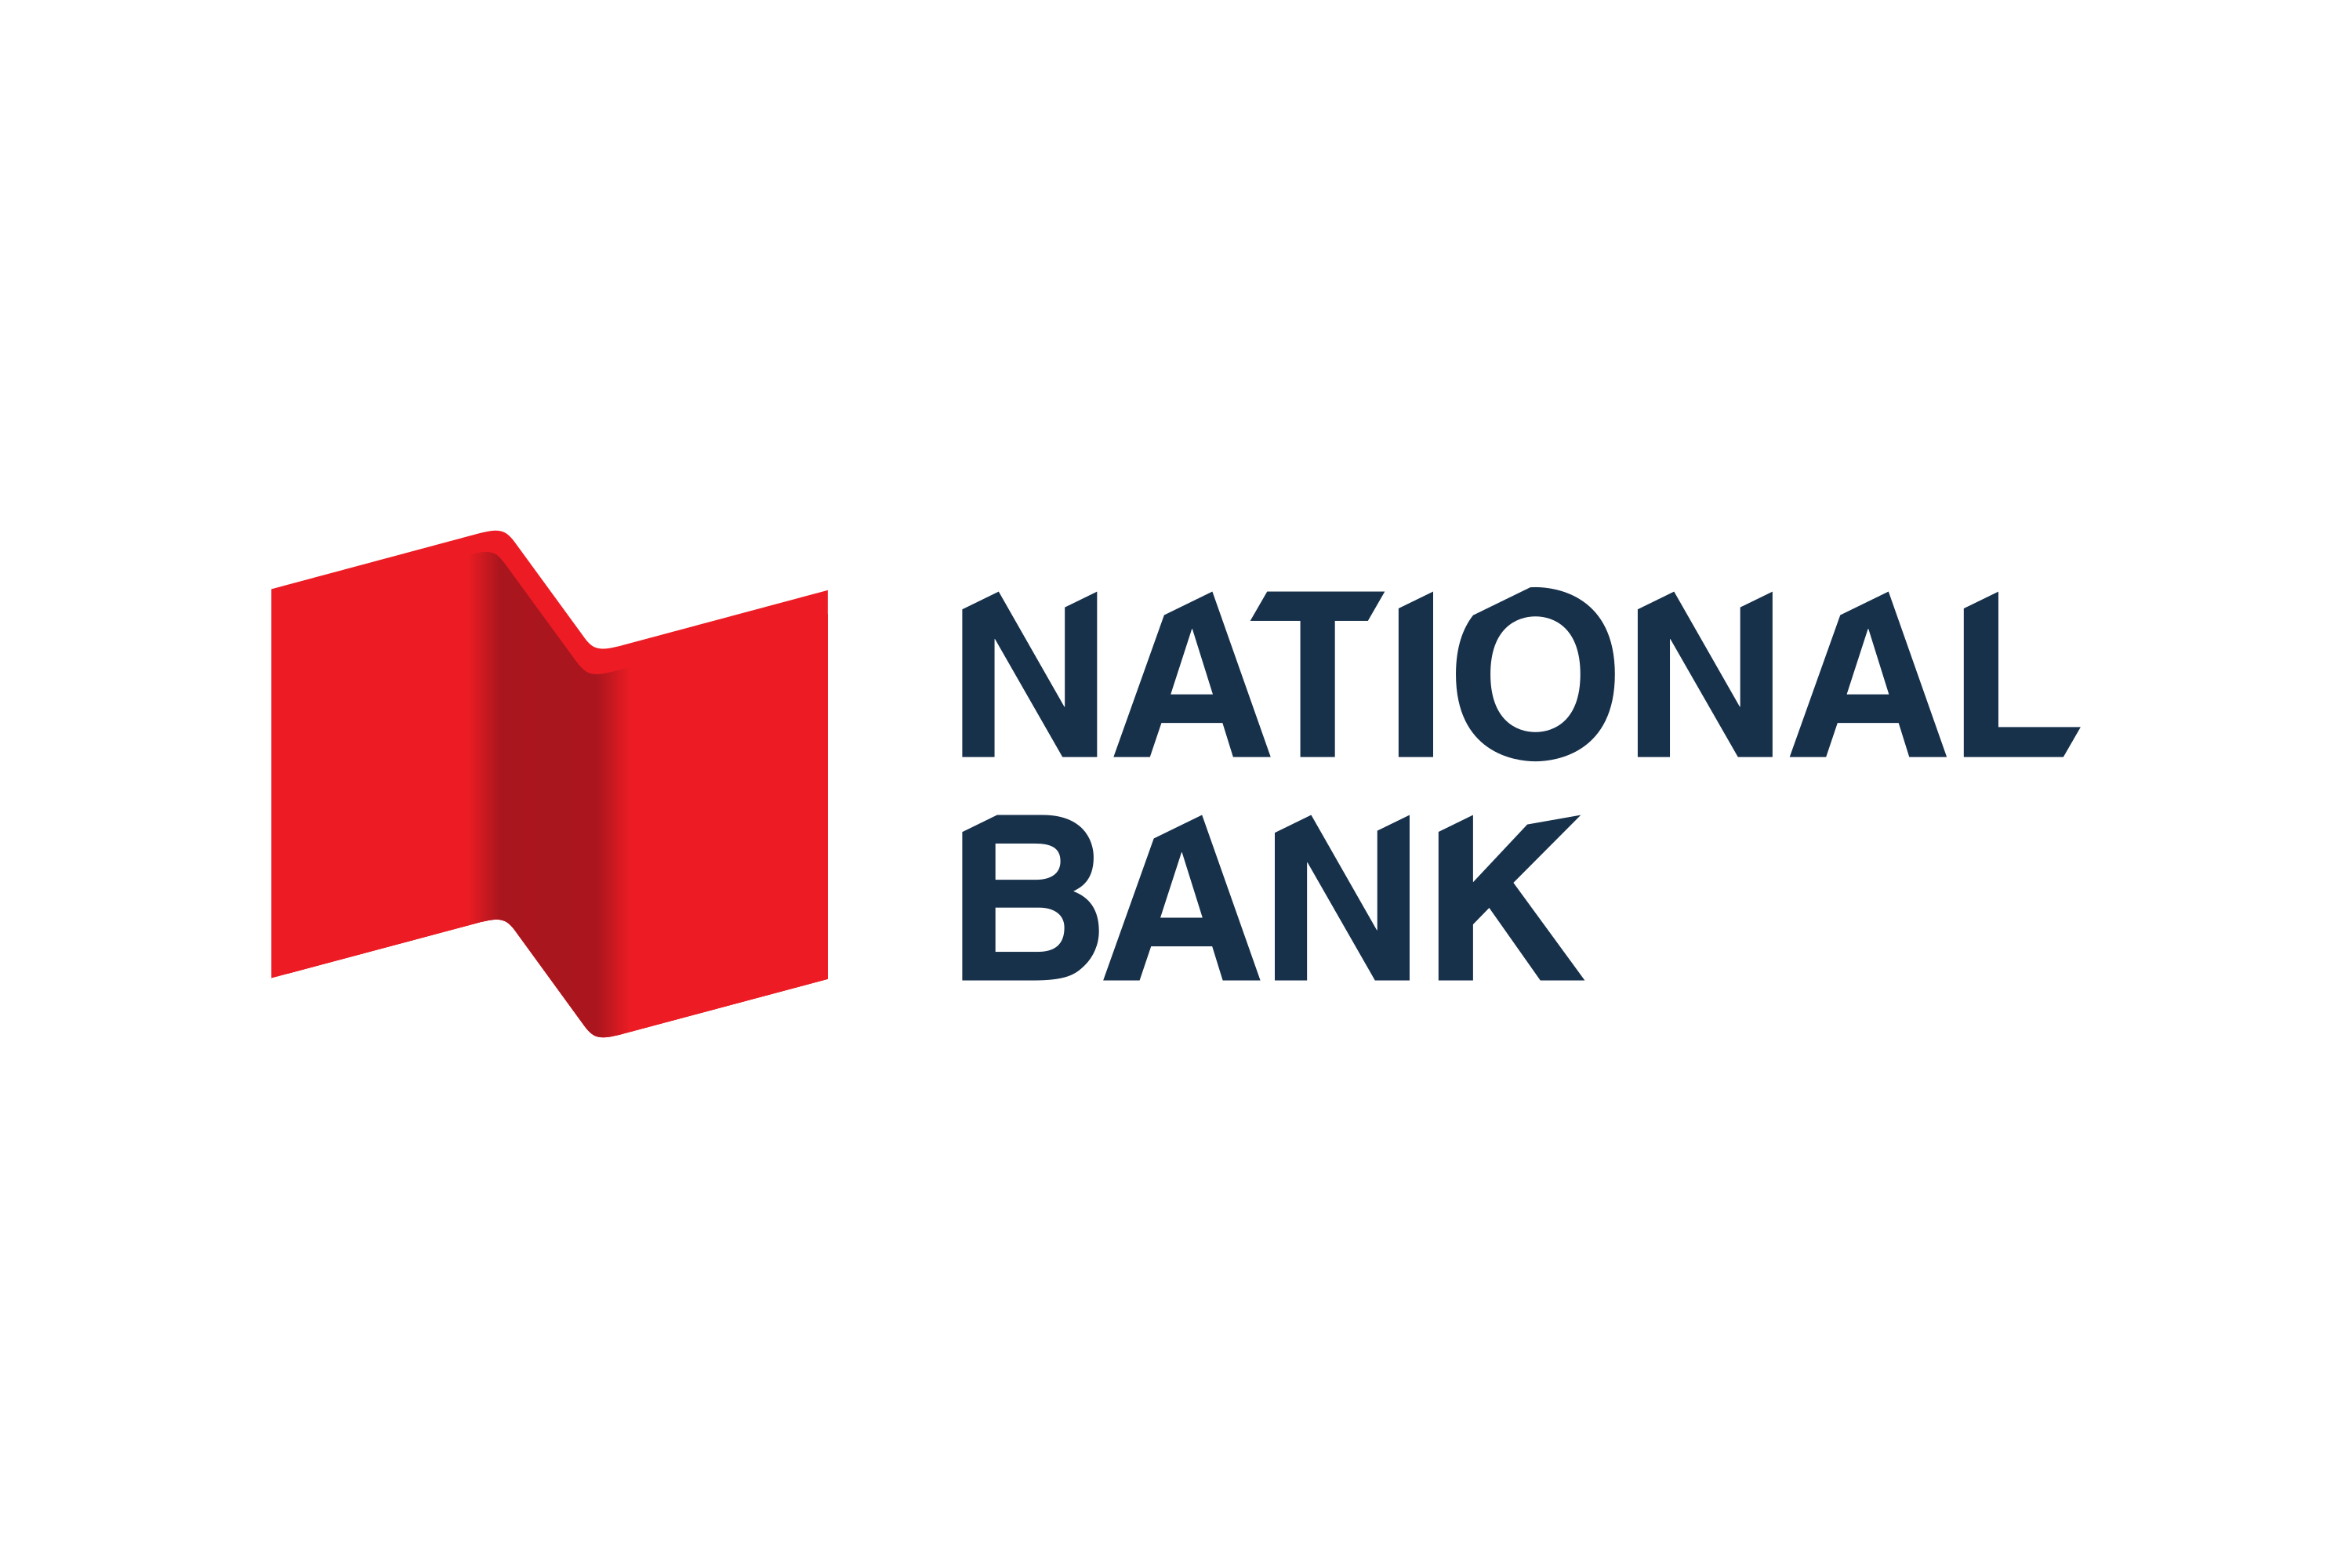 National_Bank_of_Canada-Logo.wine